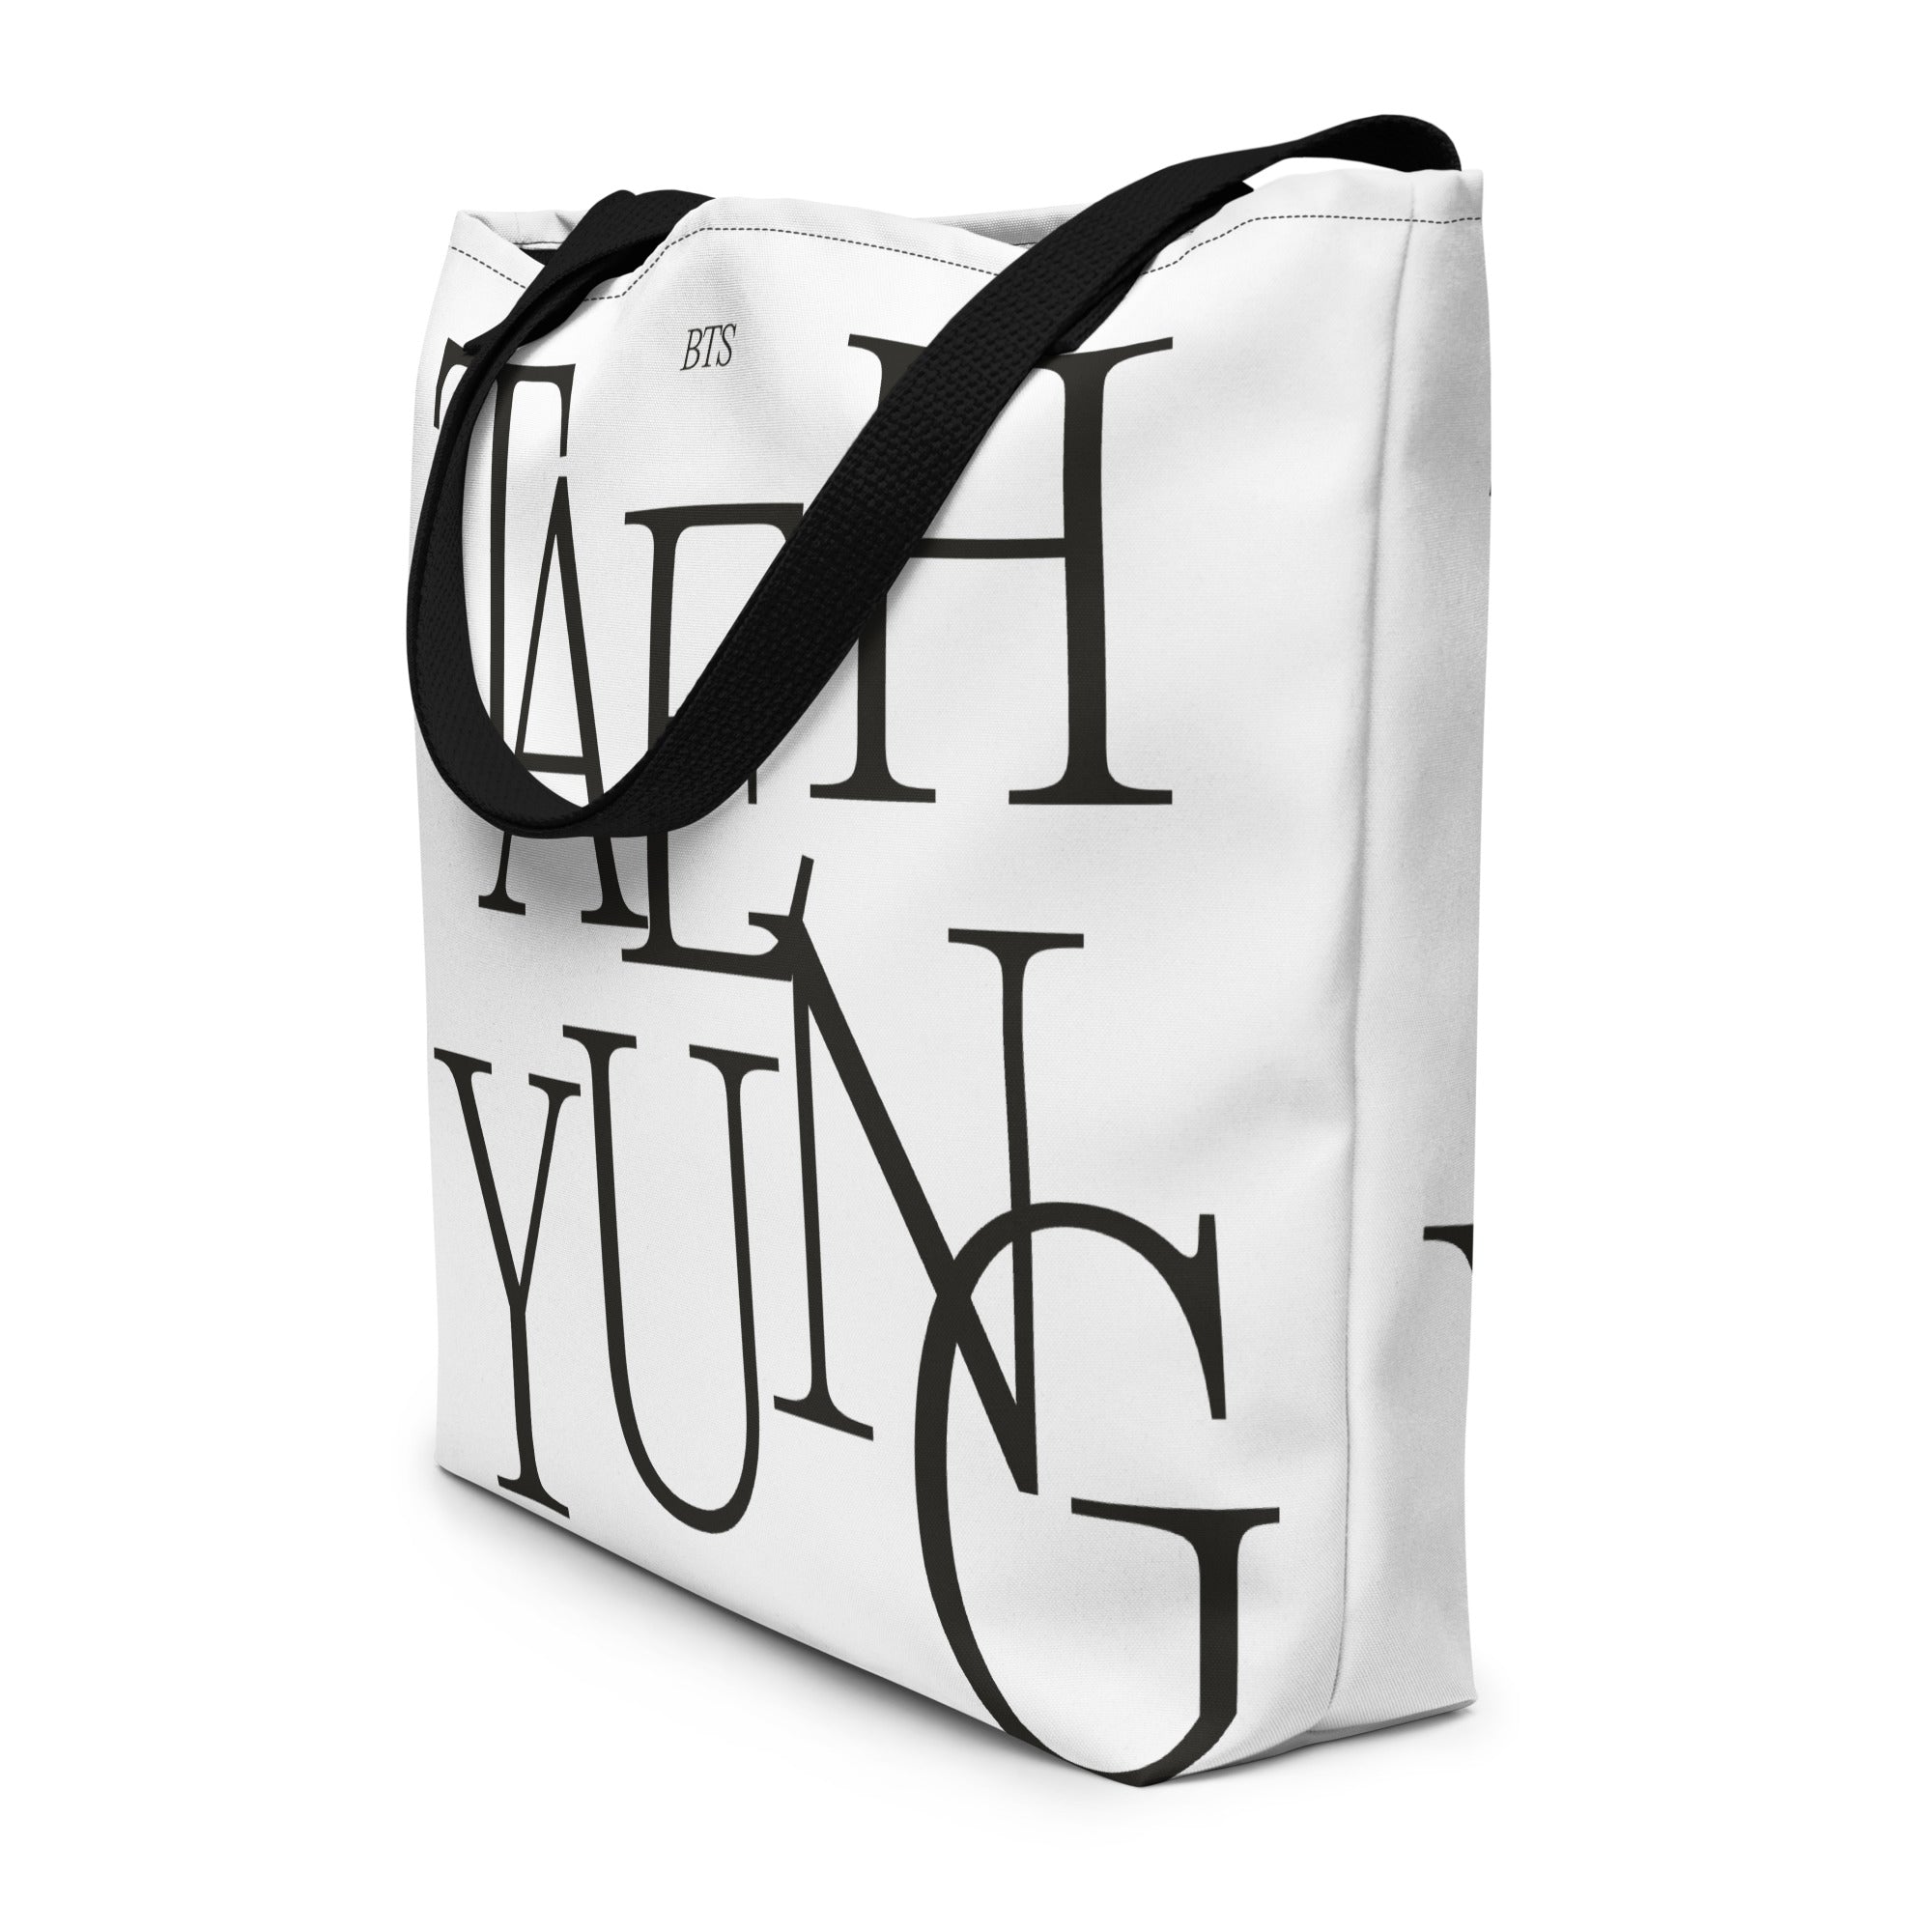 BTS Taehyung Black/White Tote Bag with Zipper